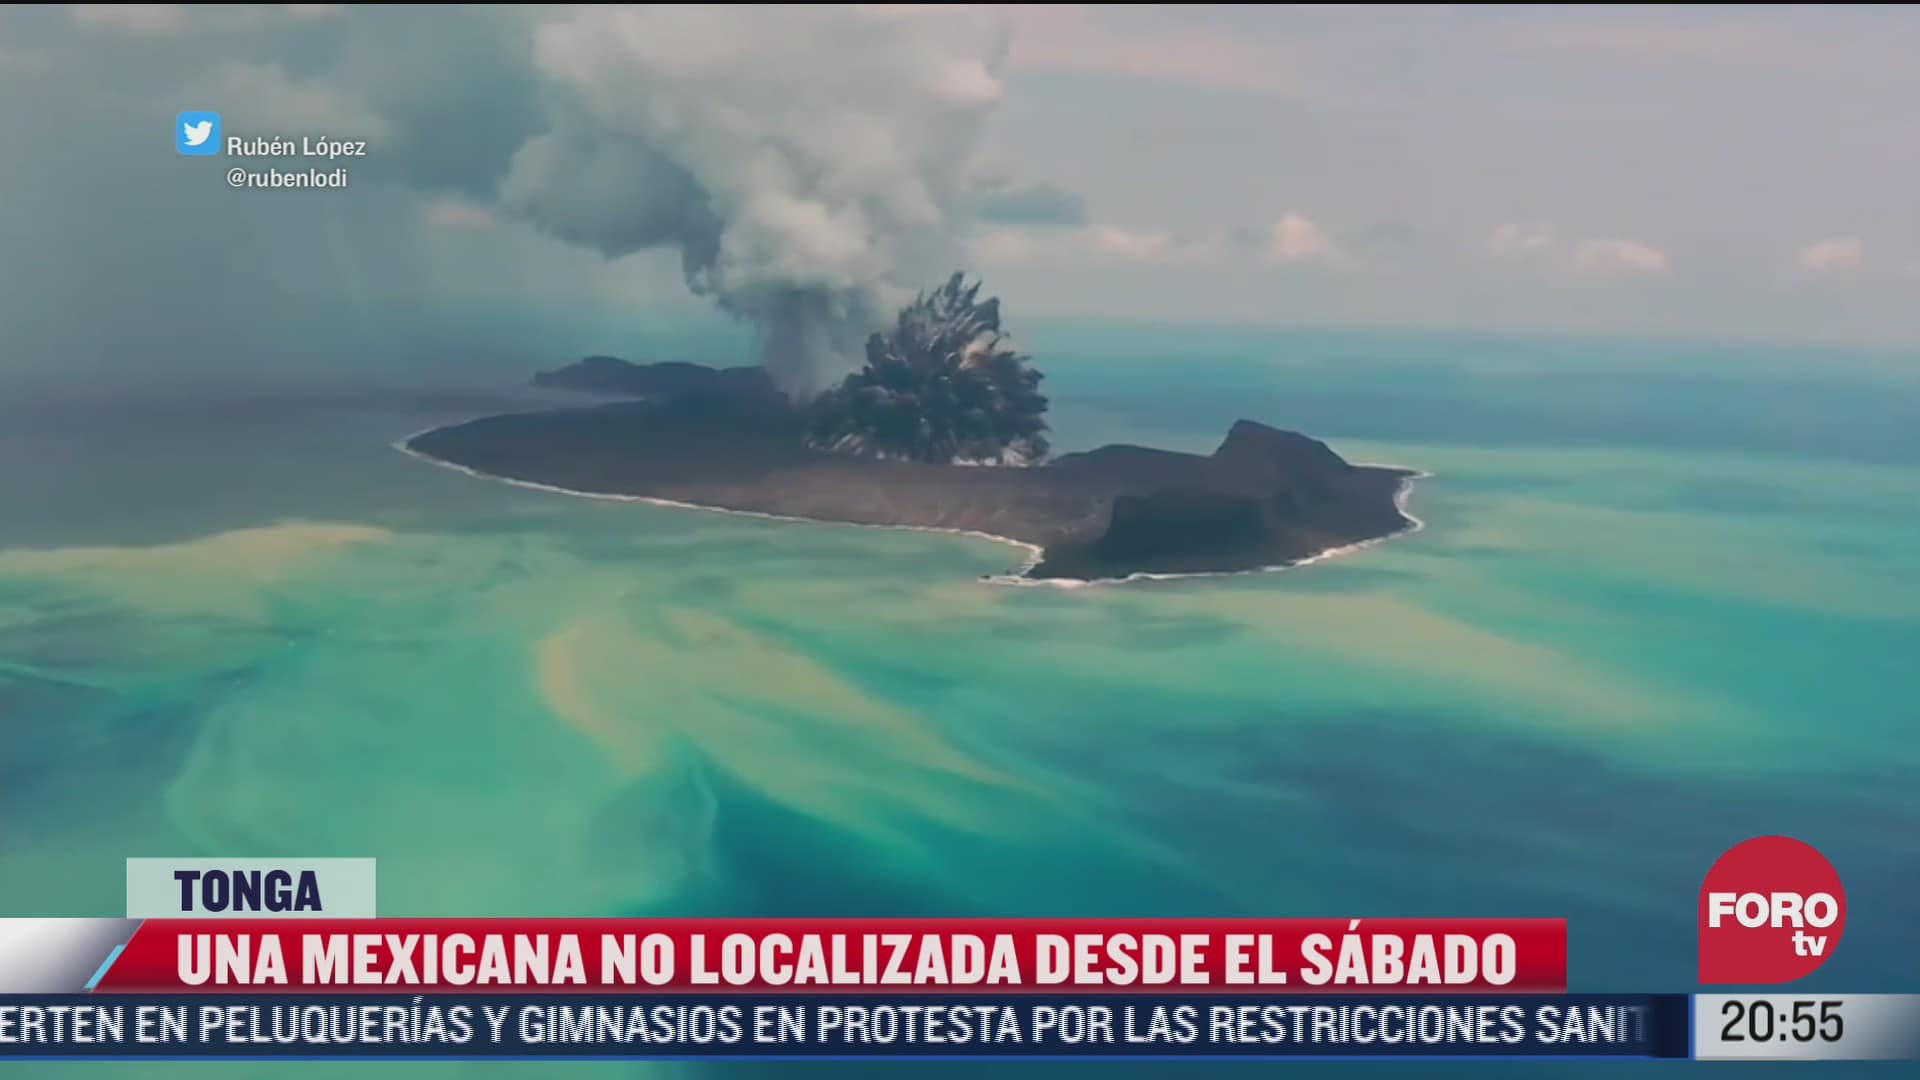 sigue desaparecida mexicana tras erupcion de volcan en tonga